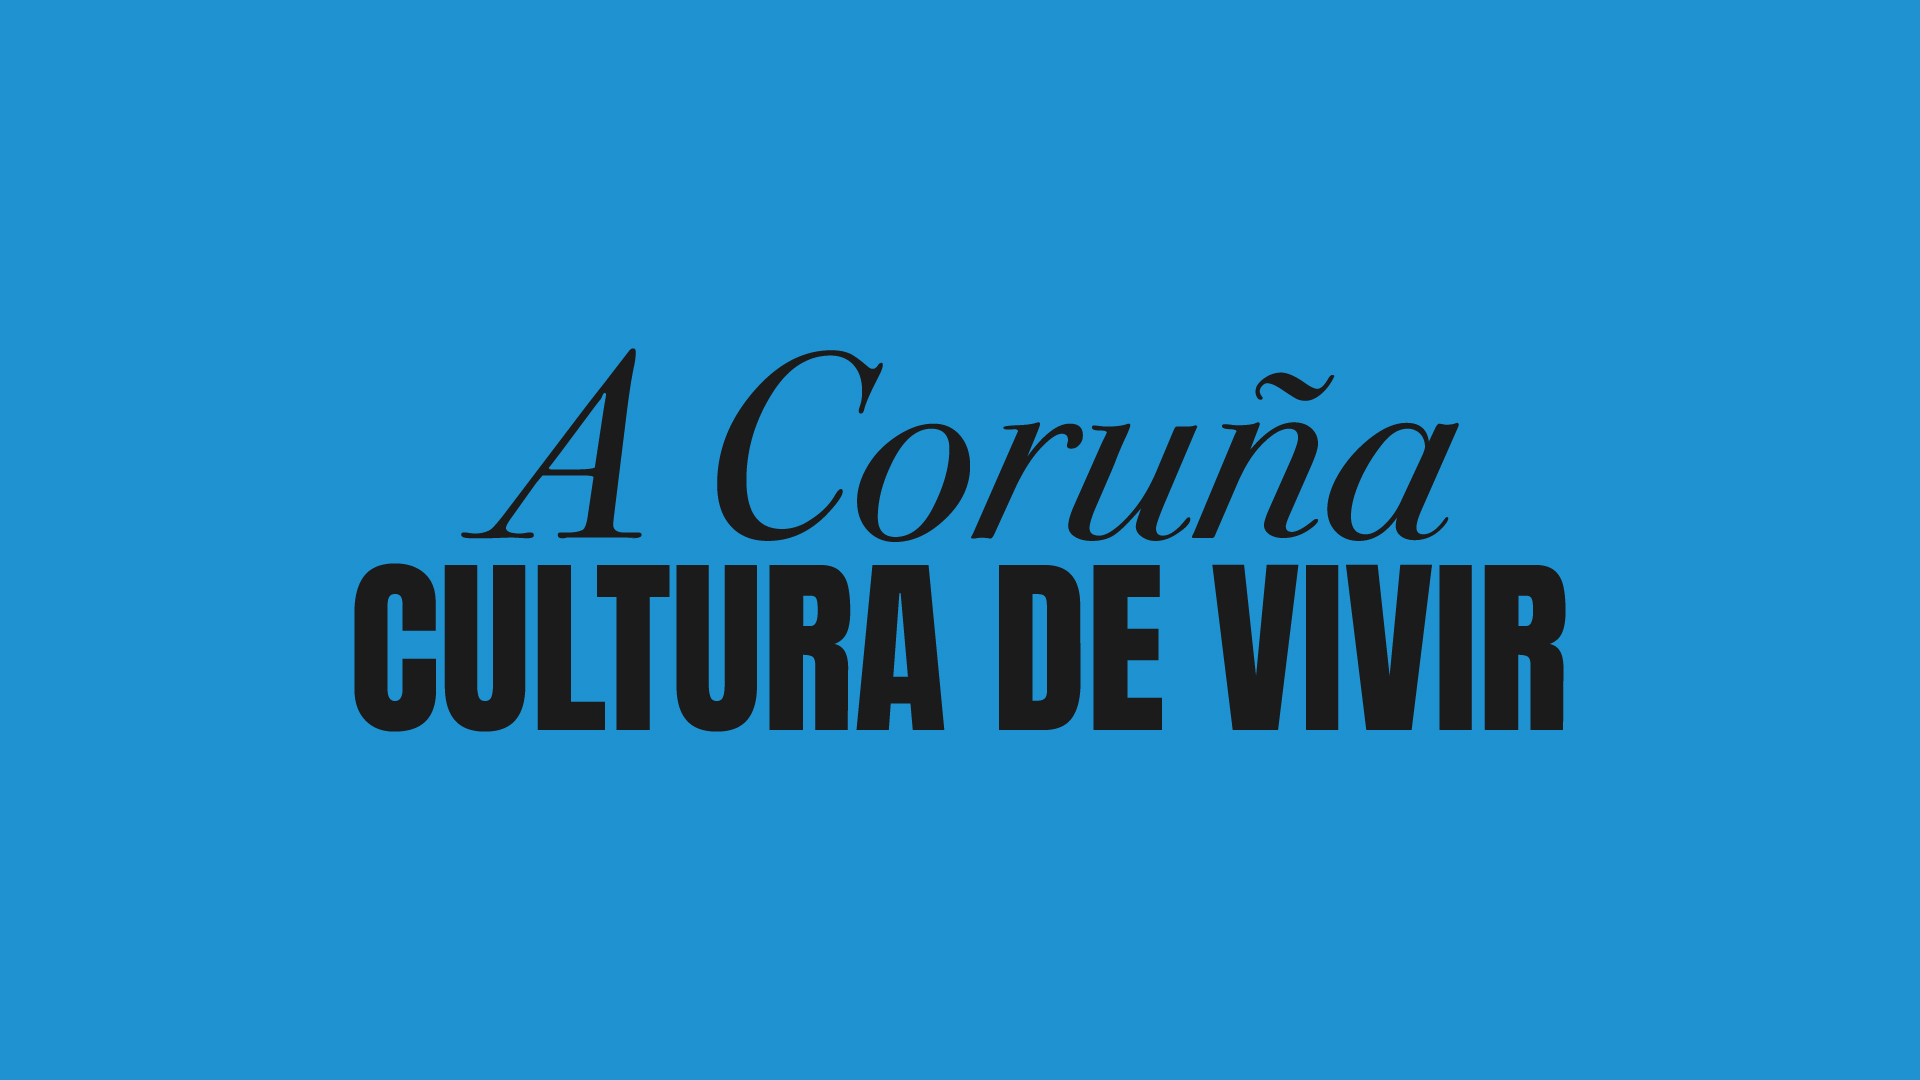 Fondo azul con el texto: A Coruña cultura de vivir